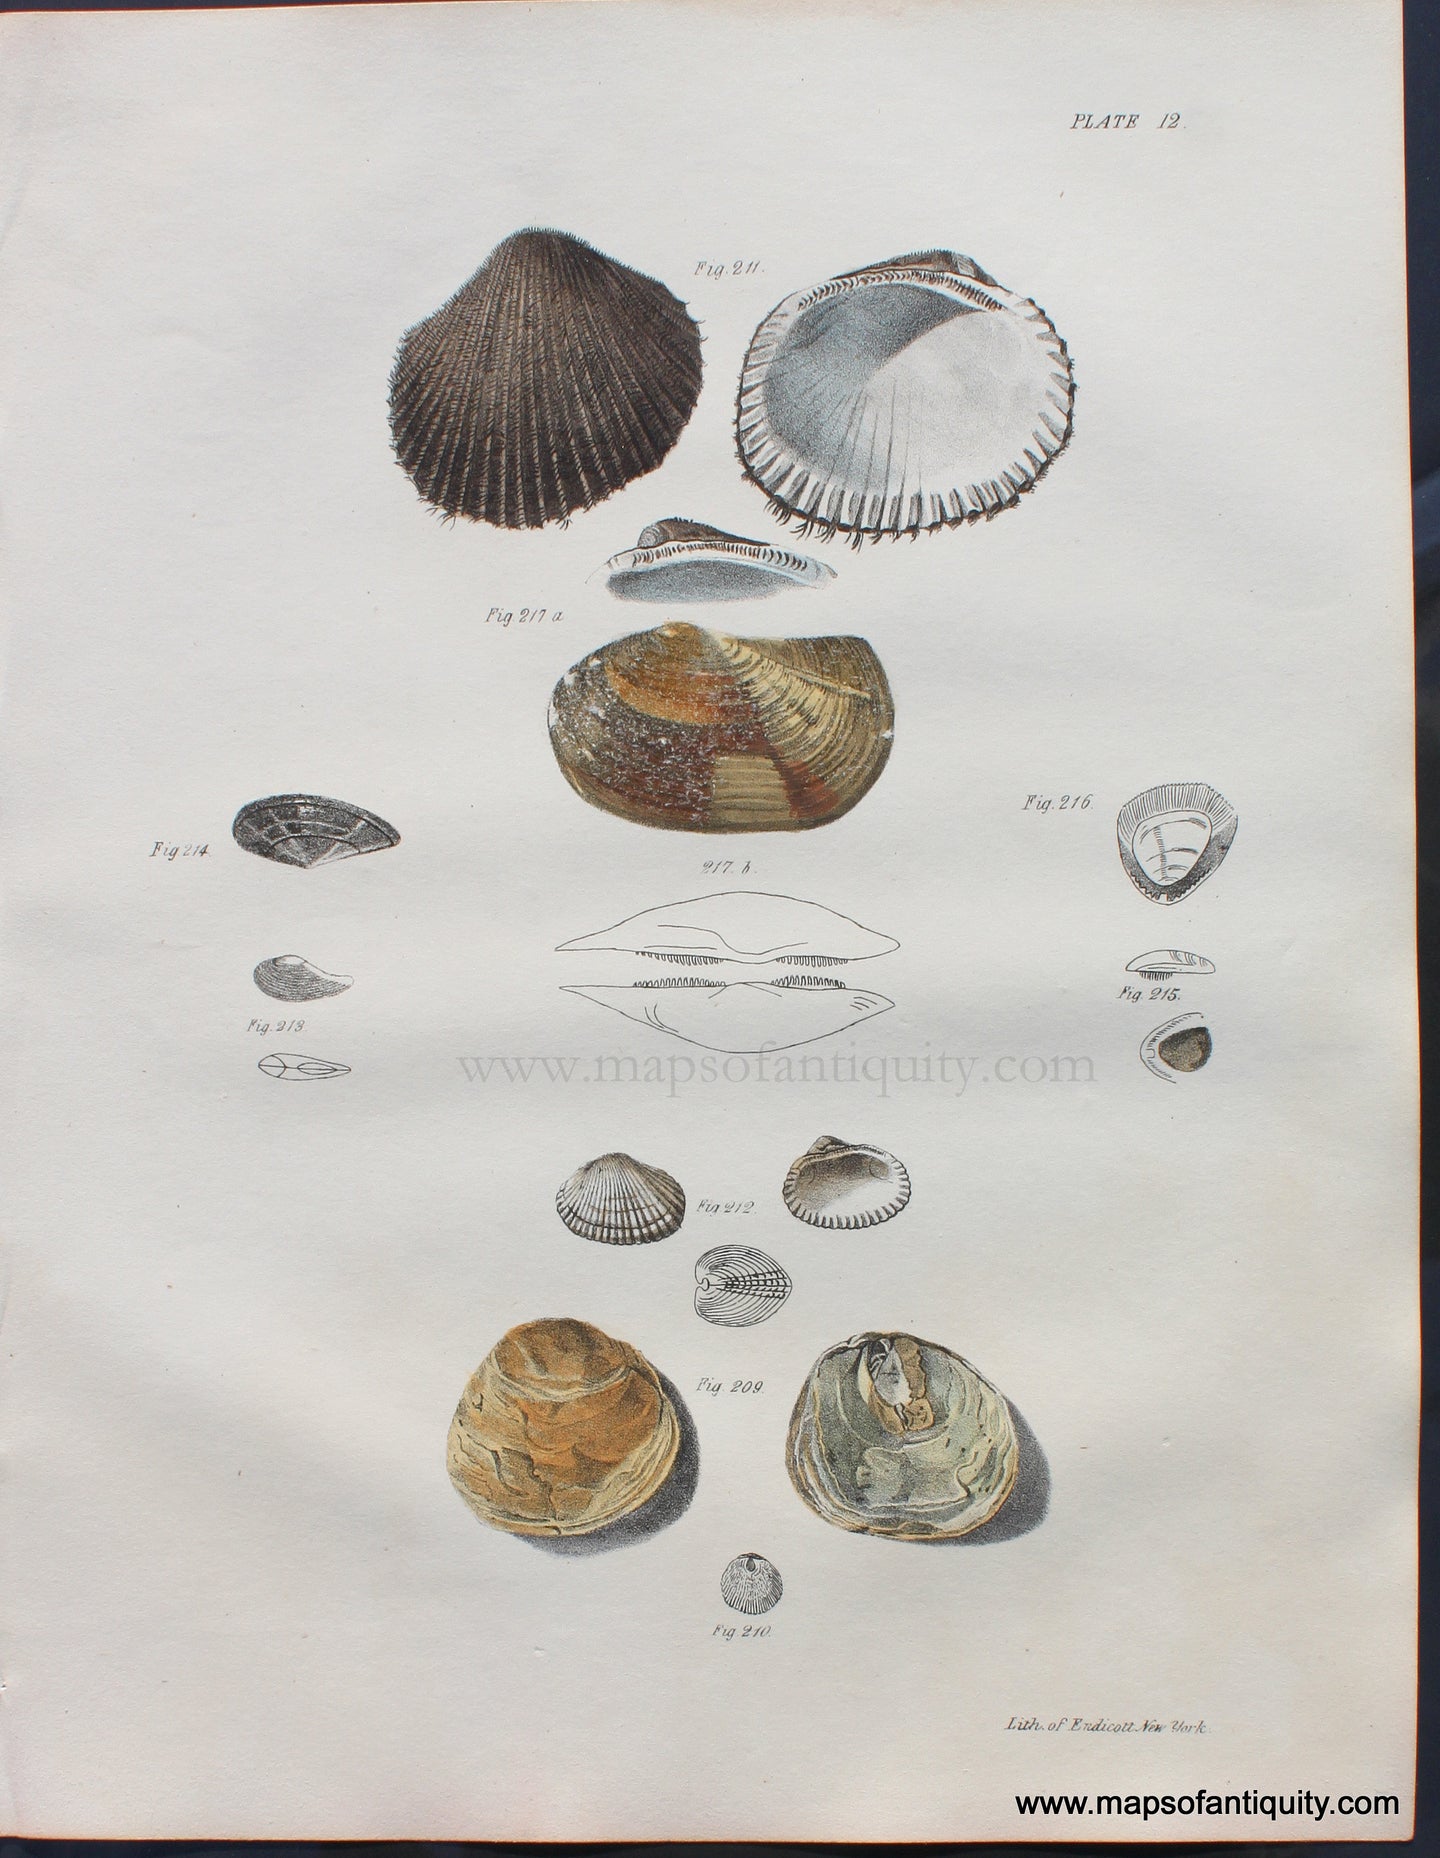 Genuine-Antique-Lithograph-Antique-Shell-Print-1840s-Endicott-Maps-Of-Antiquity